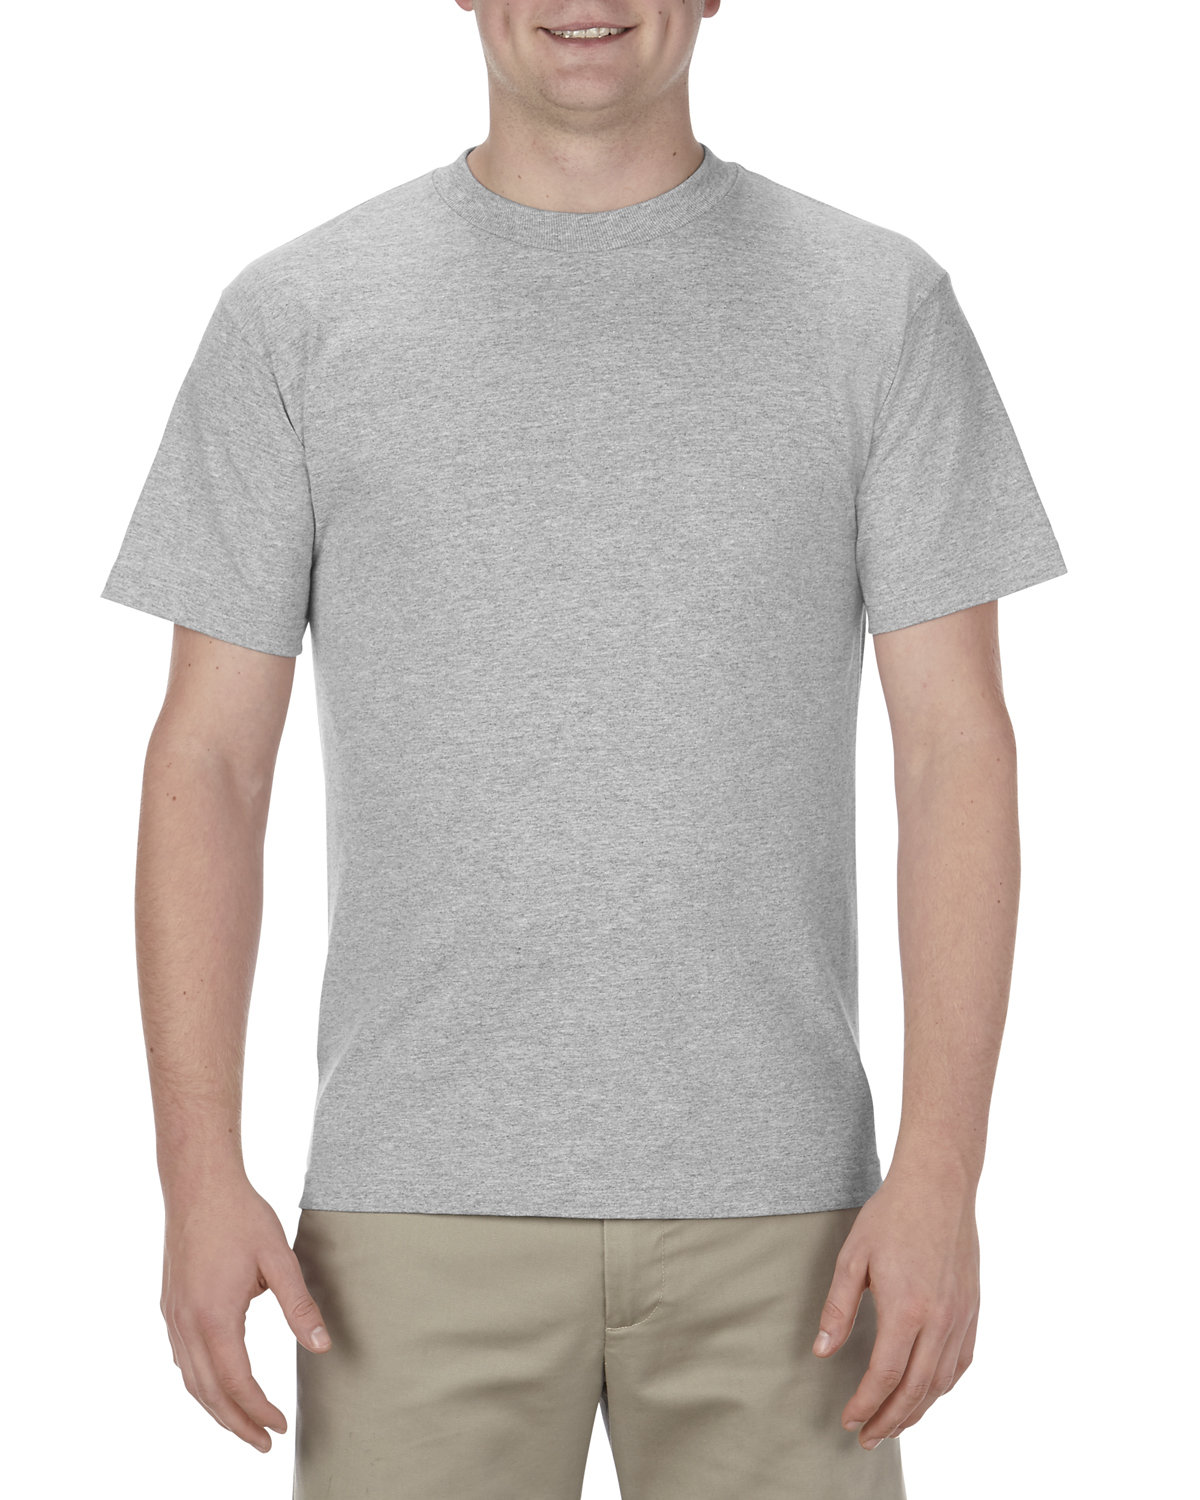 American Apparel Adult 6.0 oz., 100% Cotton T-Shirt HEATHER GREY 